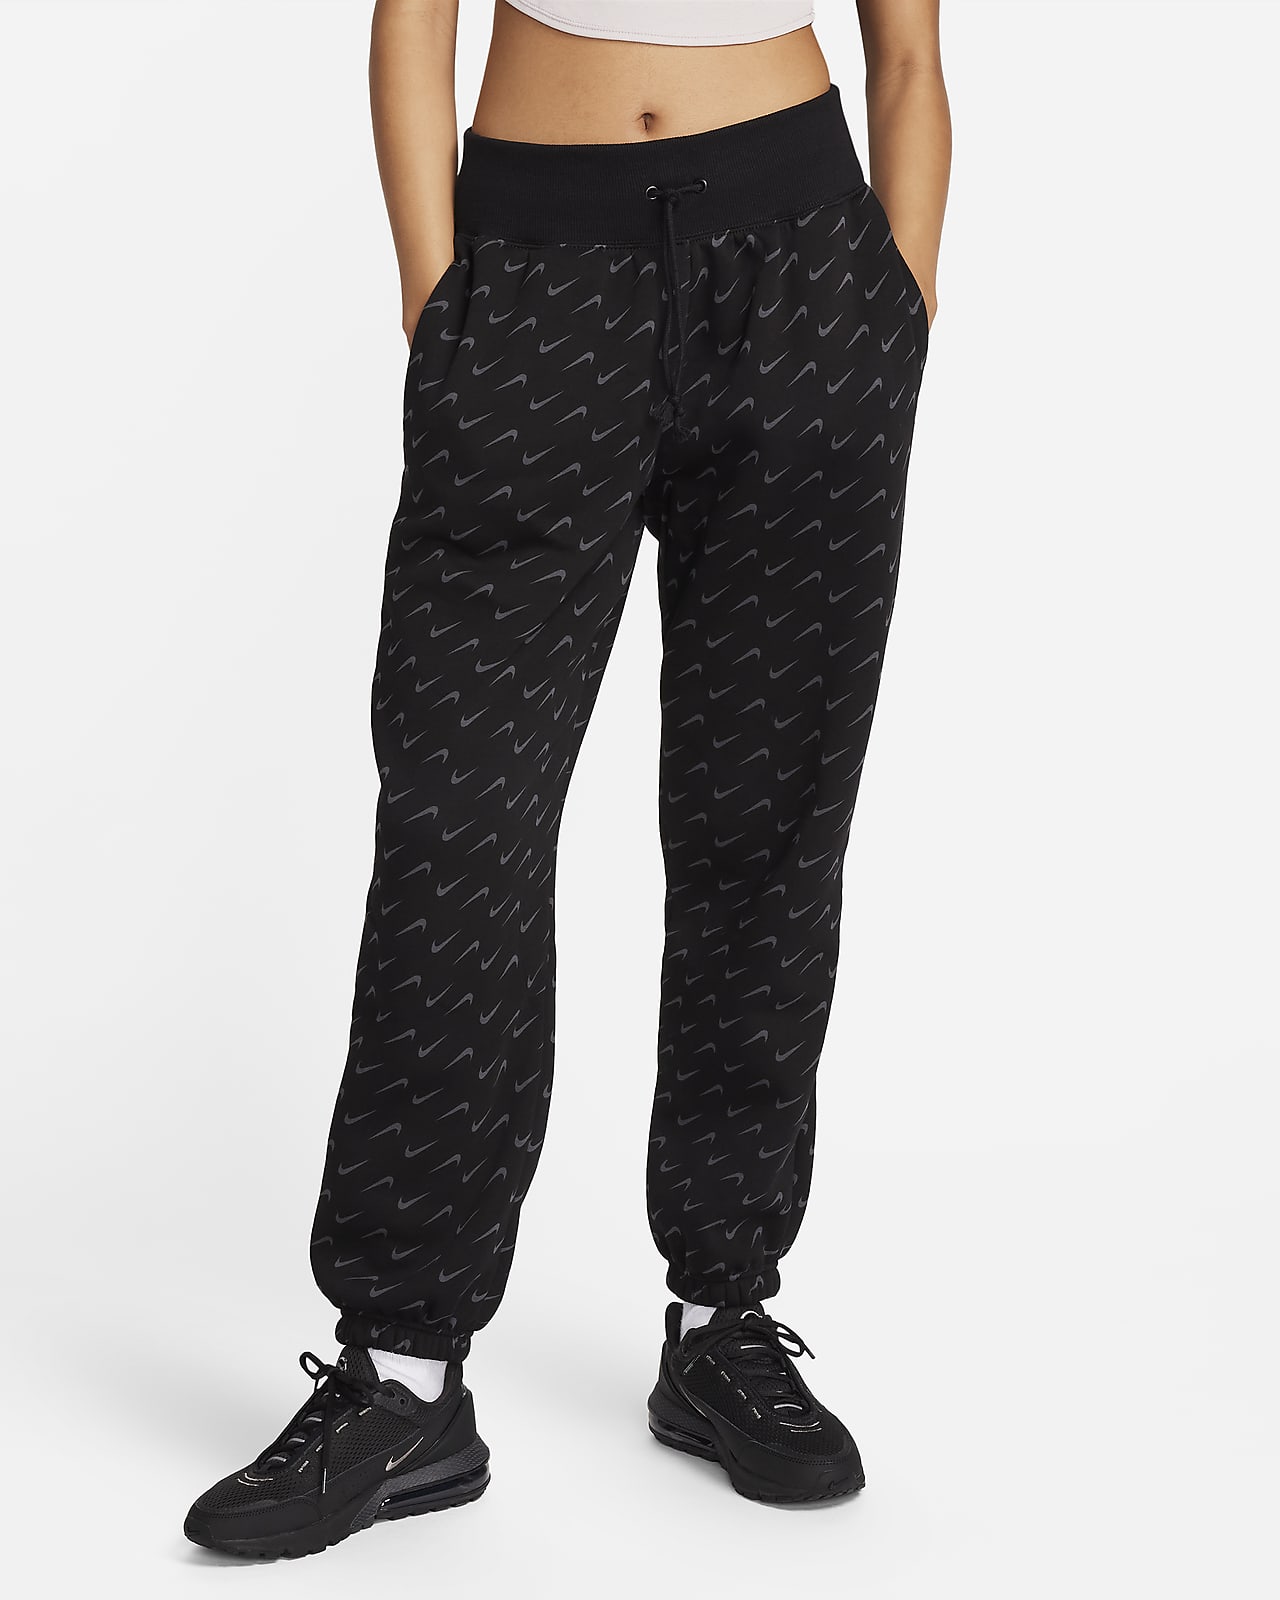 Nike Sportswear Phoenix Fleece Pantalons de xandall oversized estampats - Dona